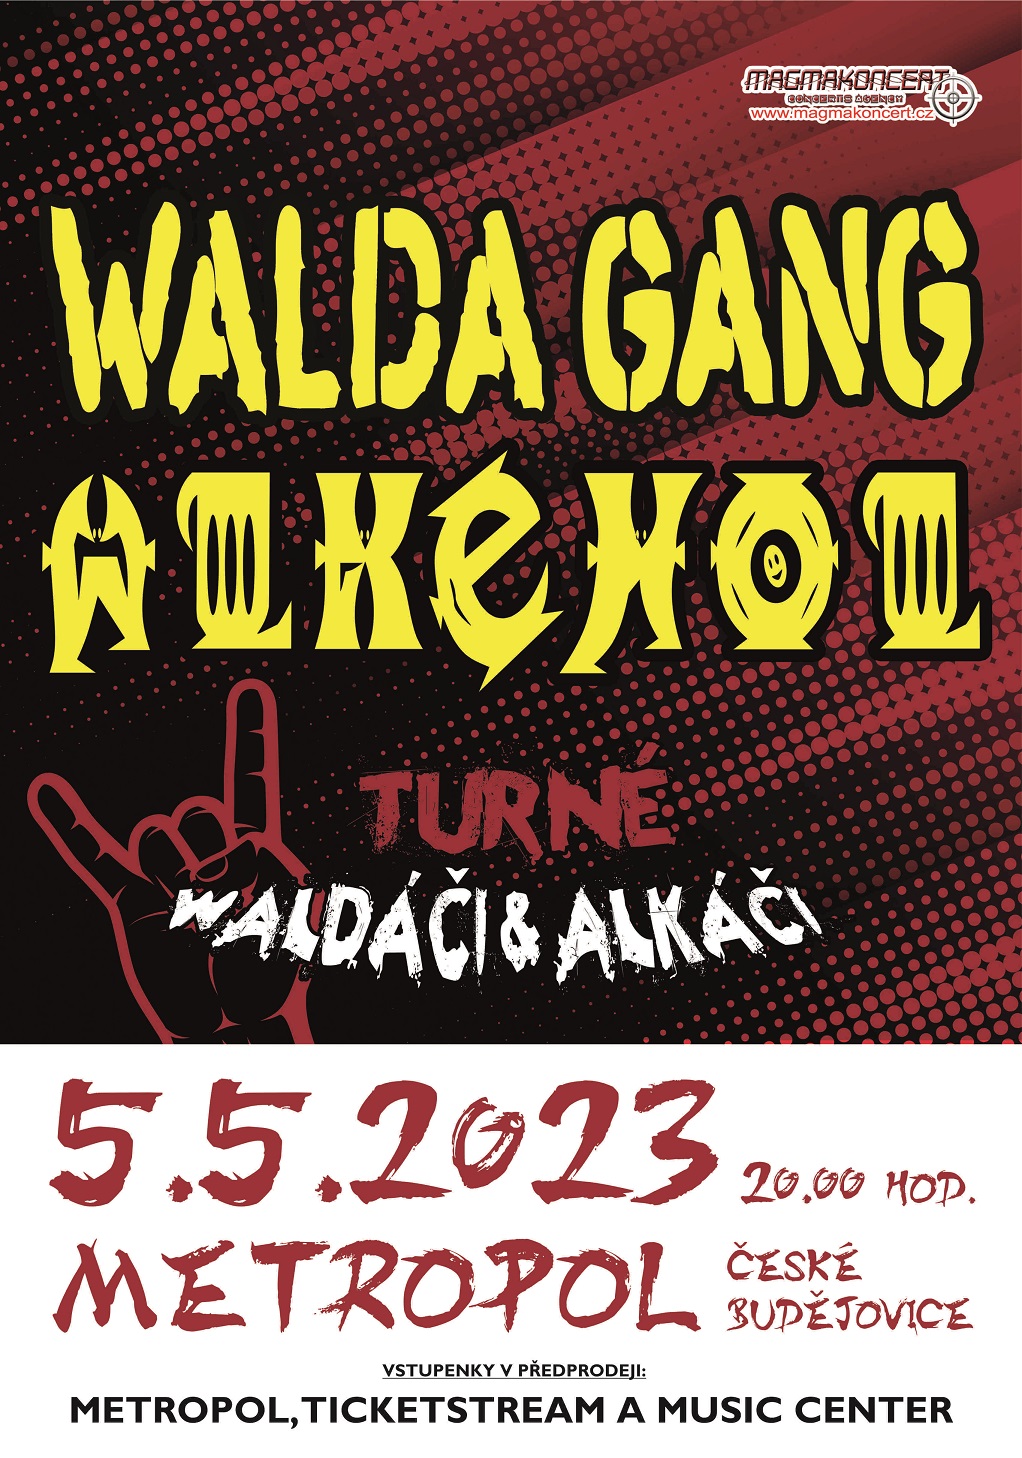 Walda Gang & Alkehol